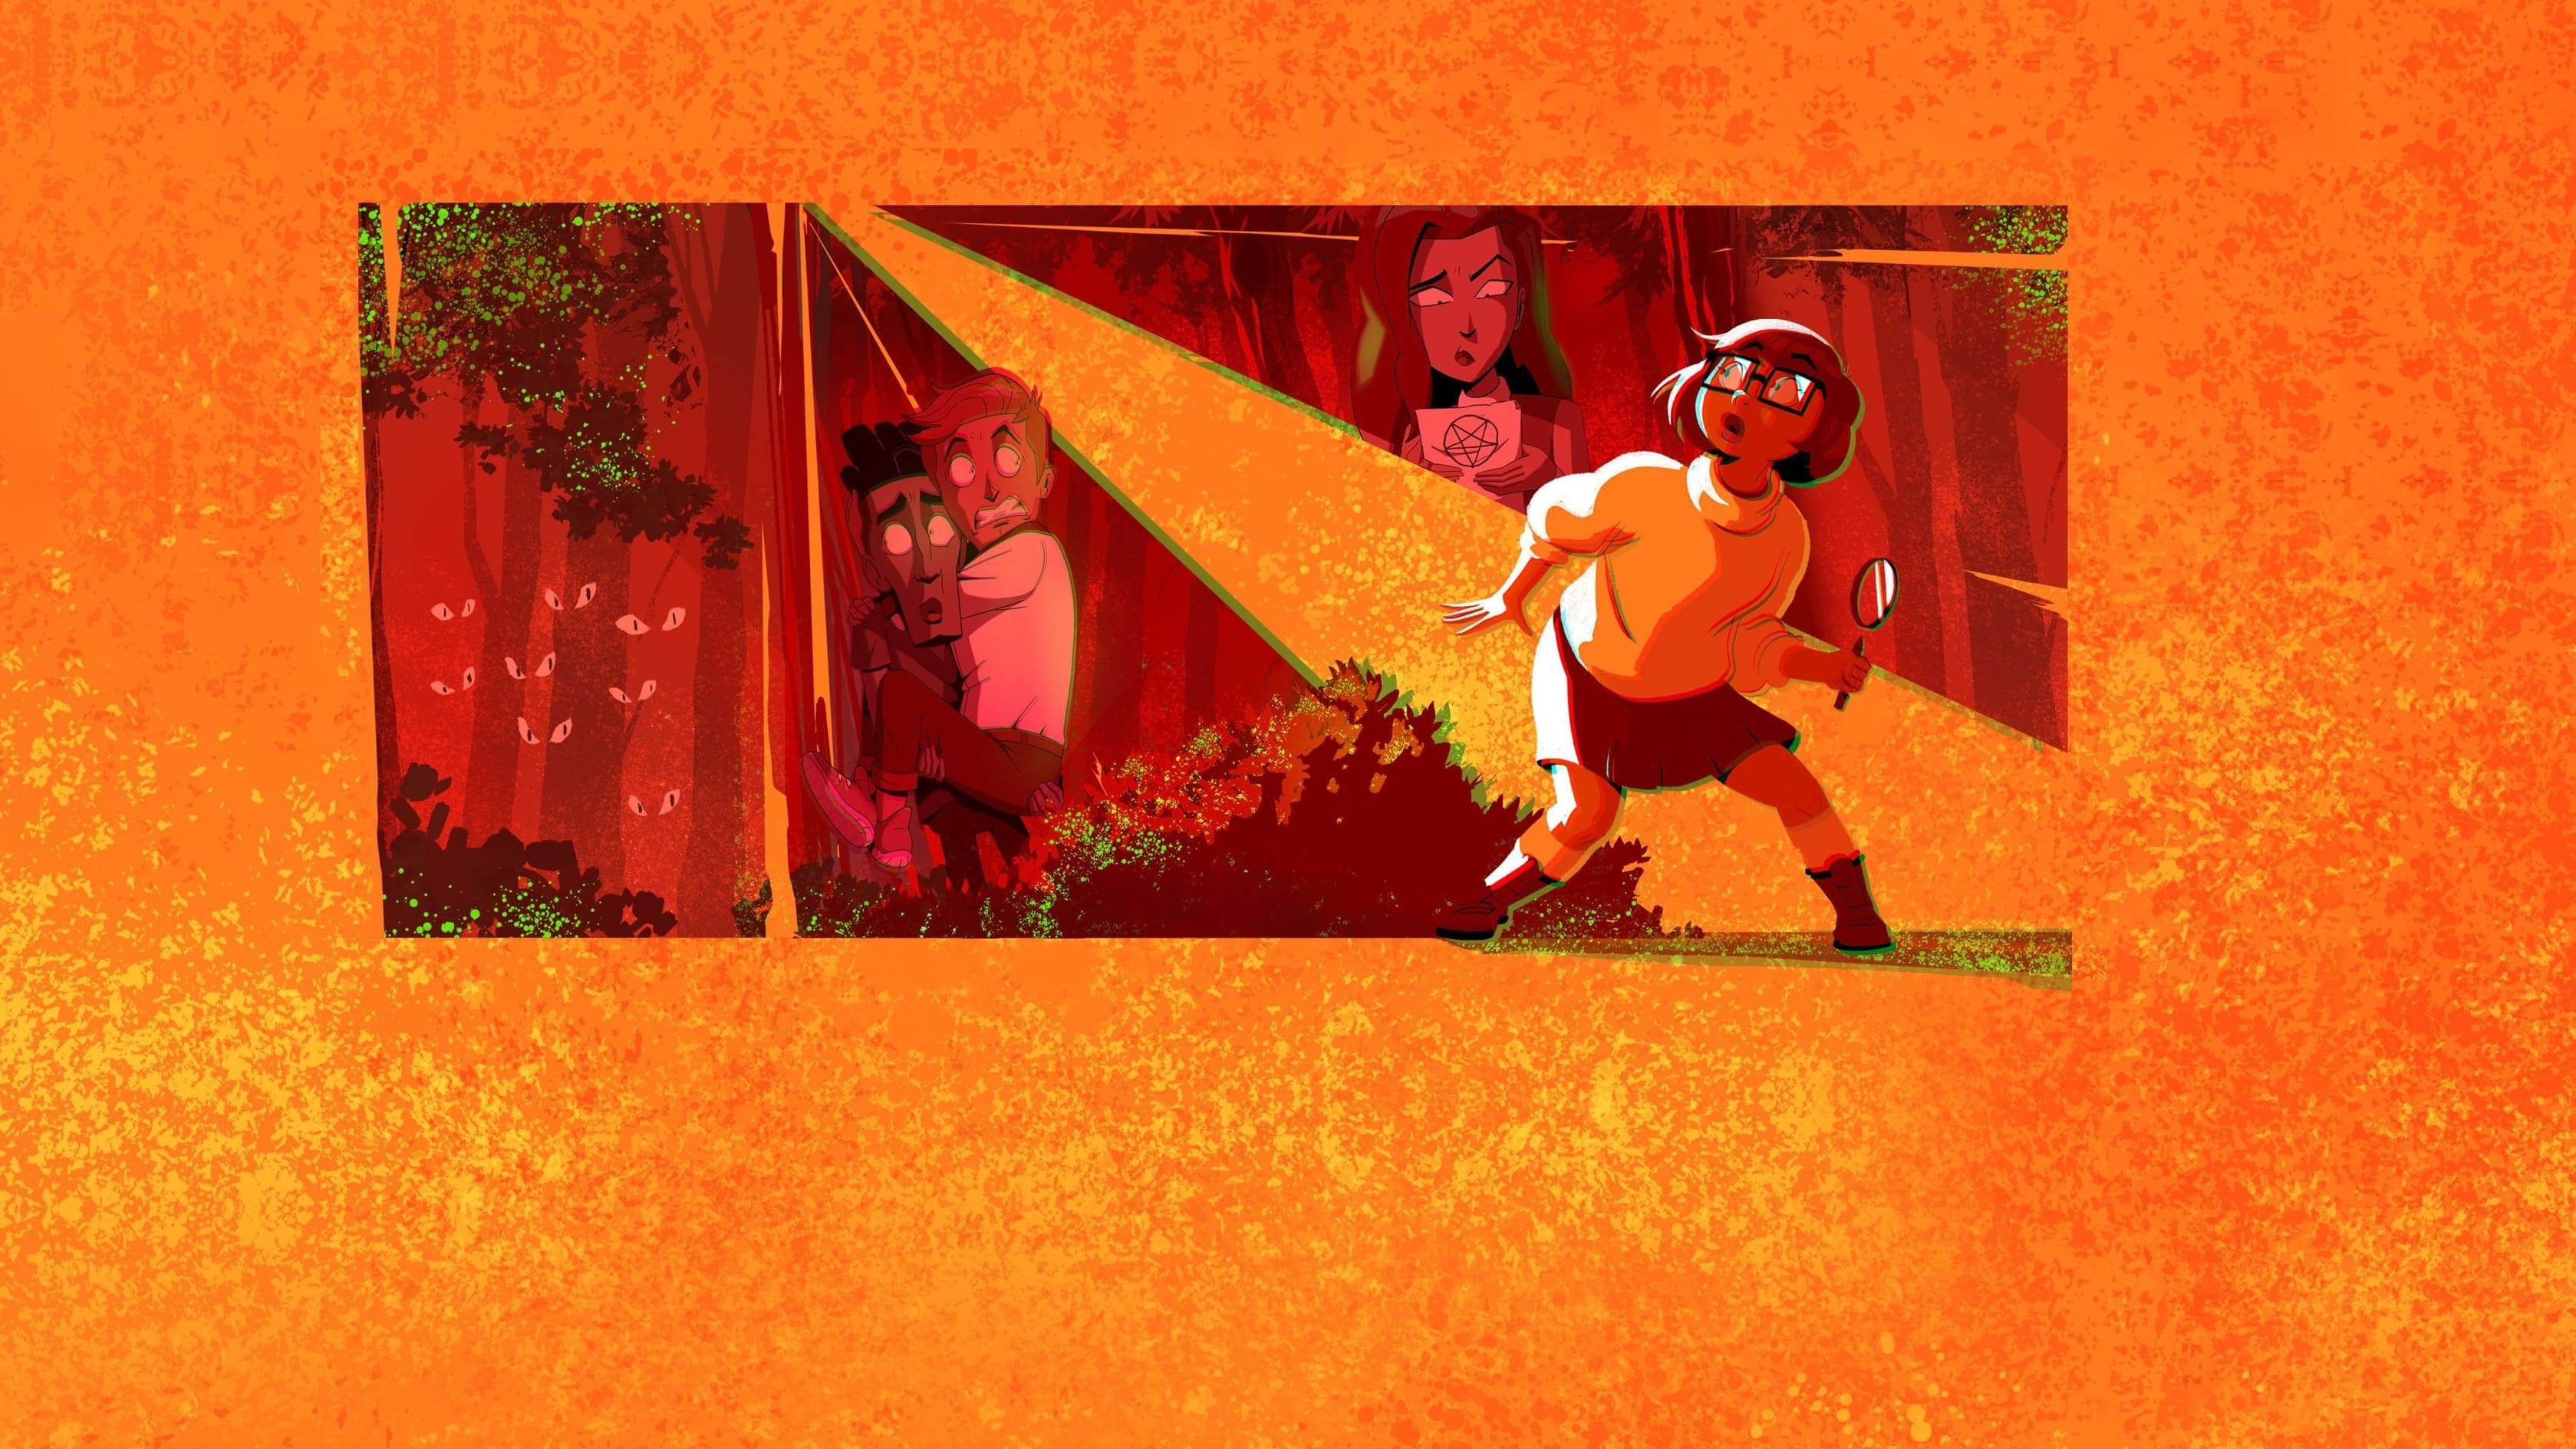 Velma - Season 1 Episode 7